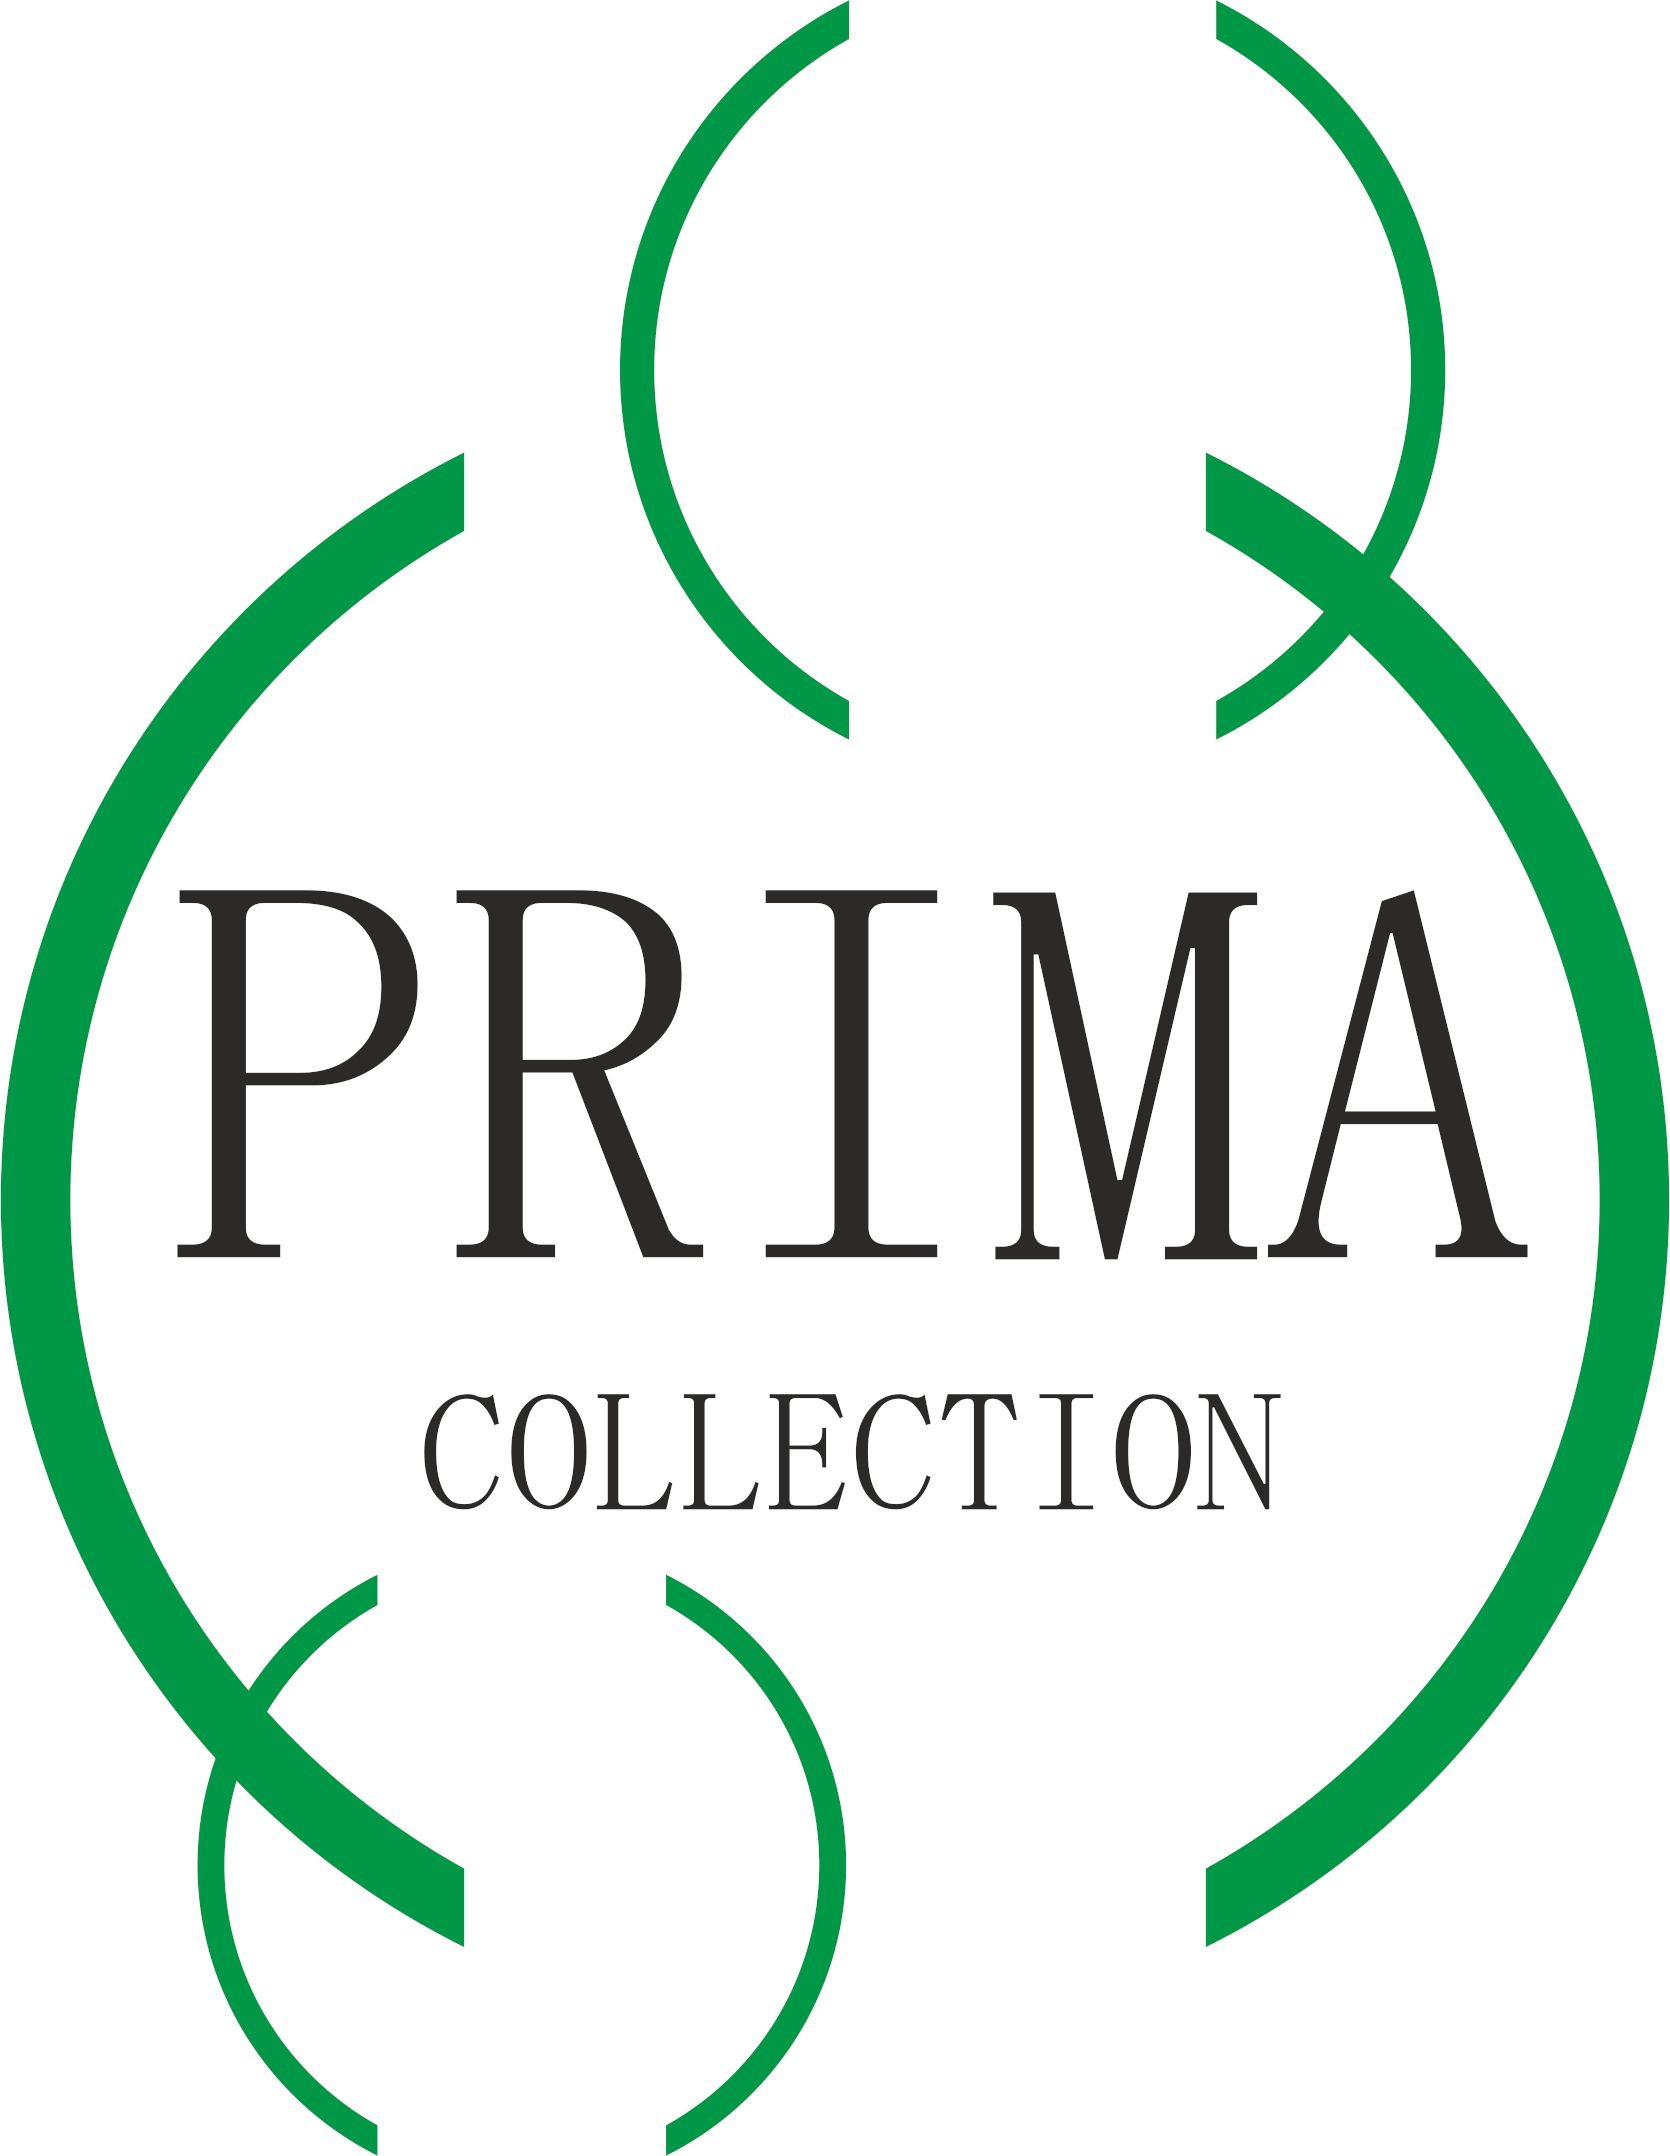 Prima collection